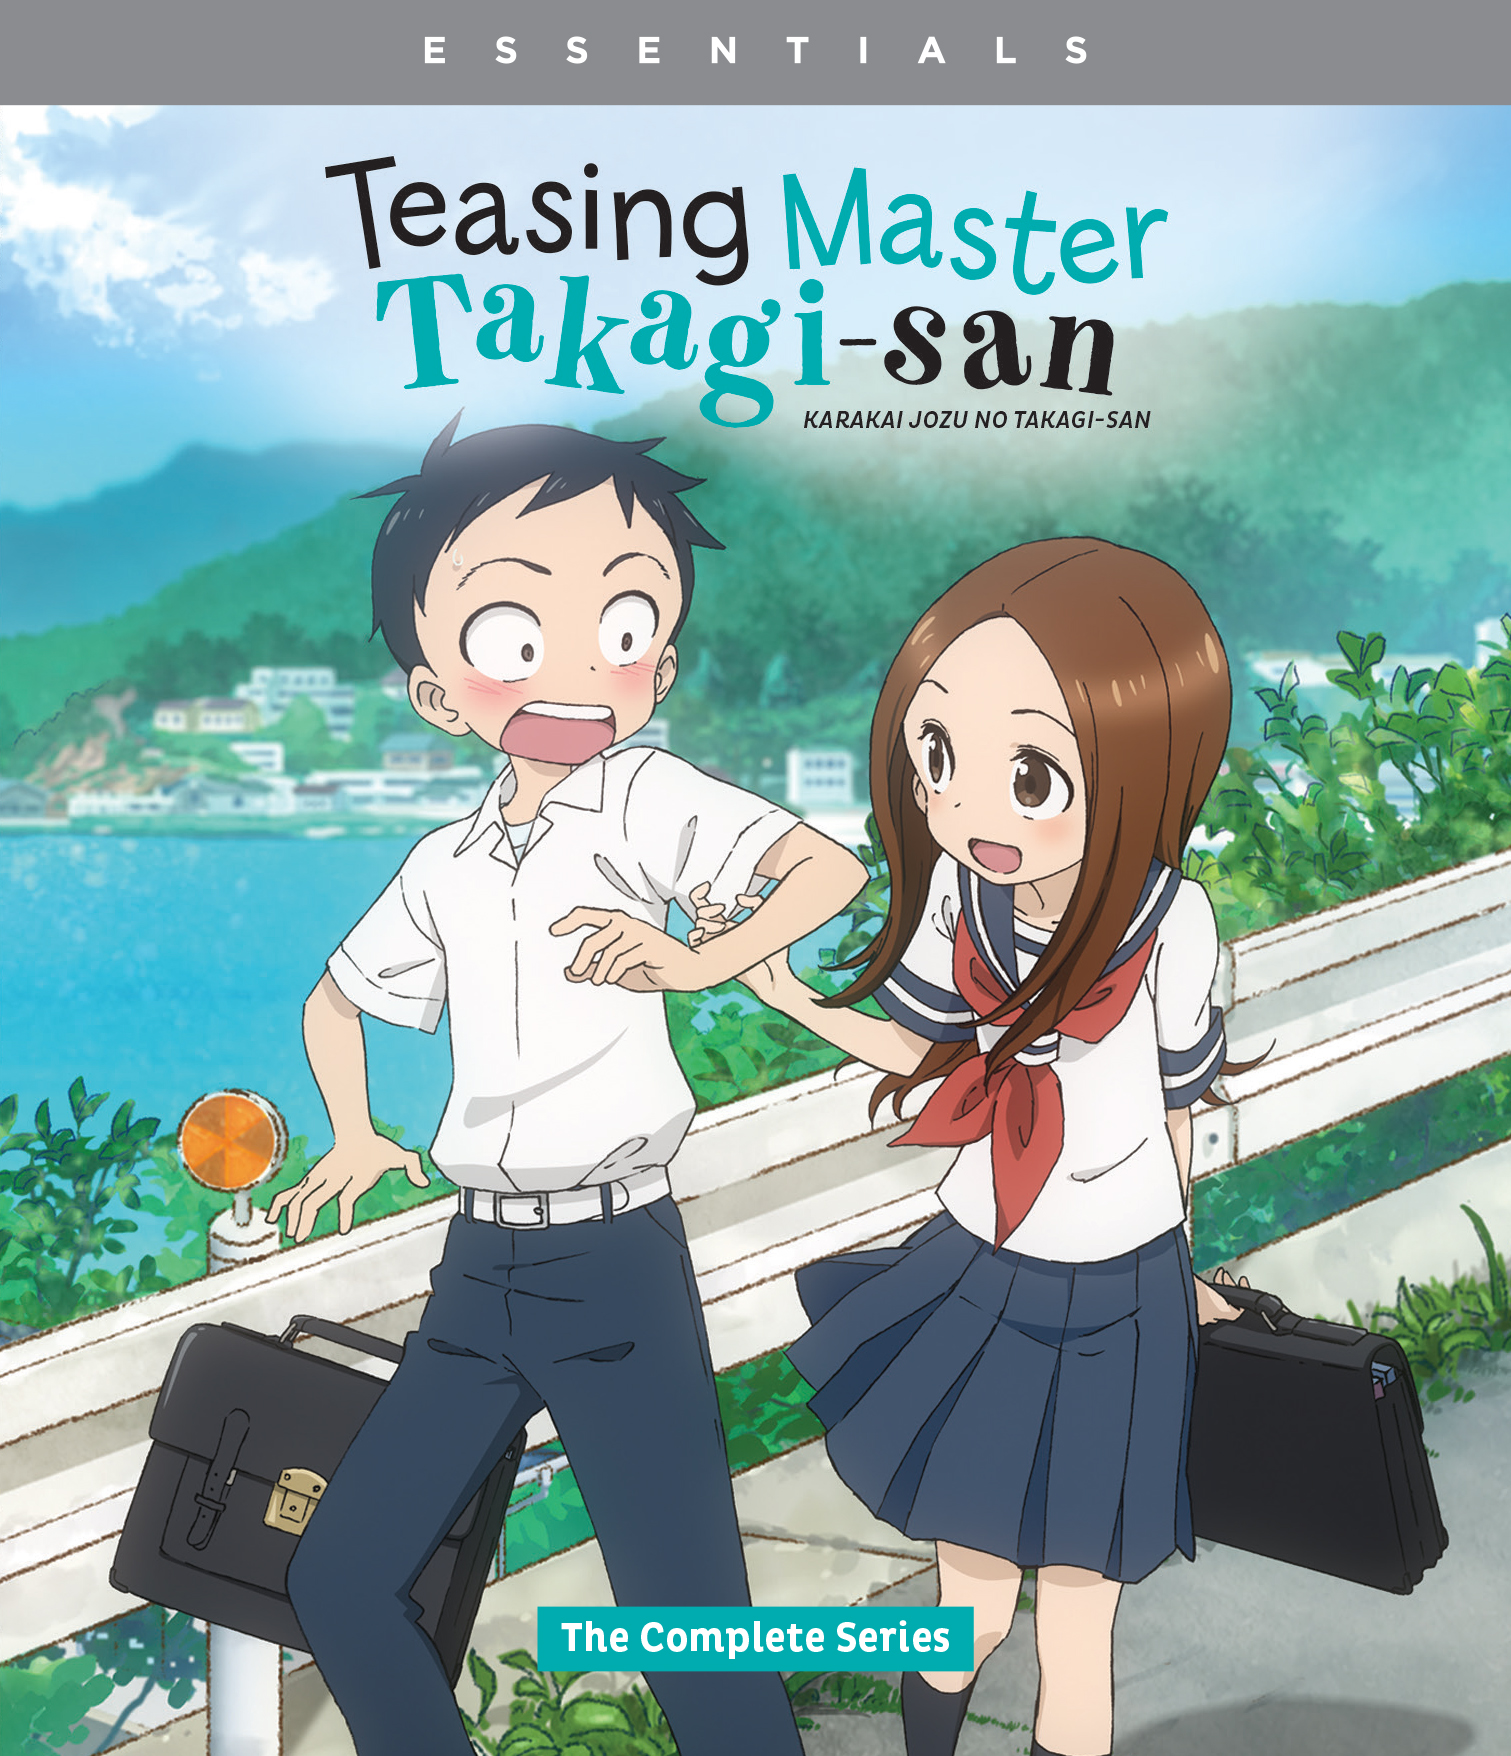 A review of Teasing Master Takagi-san